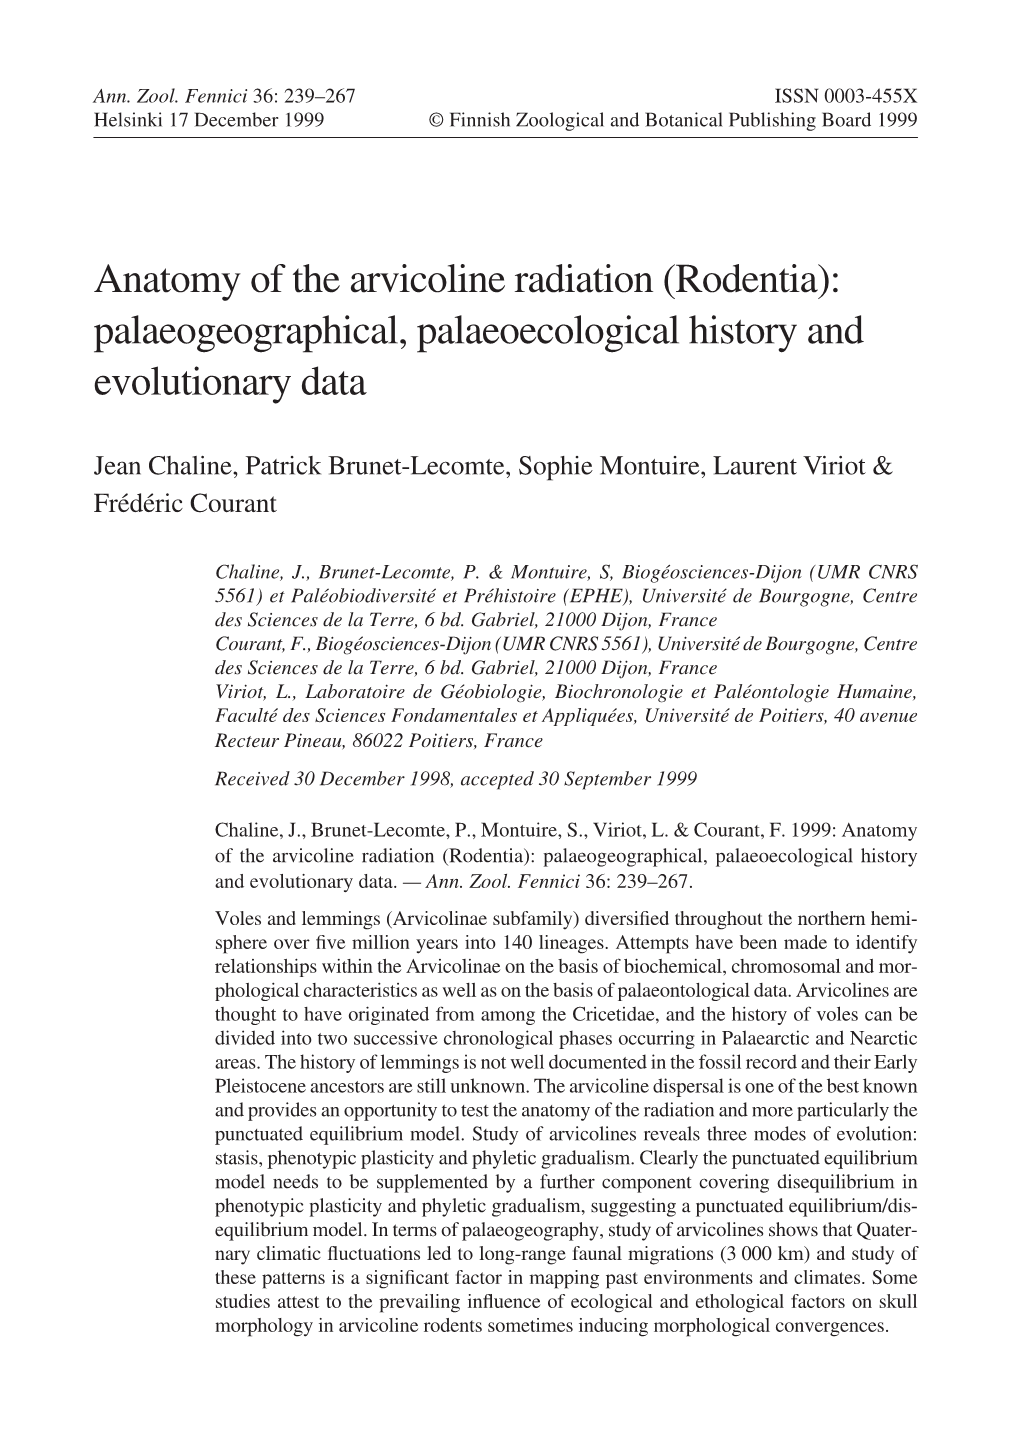 Anatomy of the Arvicoline Radiation (Rodentia): Palaeogeographical, Palaeoecological History and Evolutionary Data